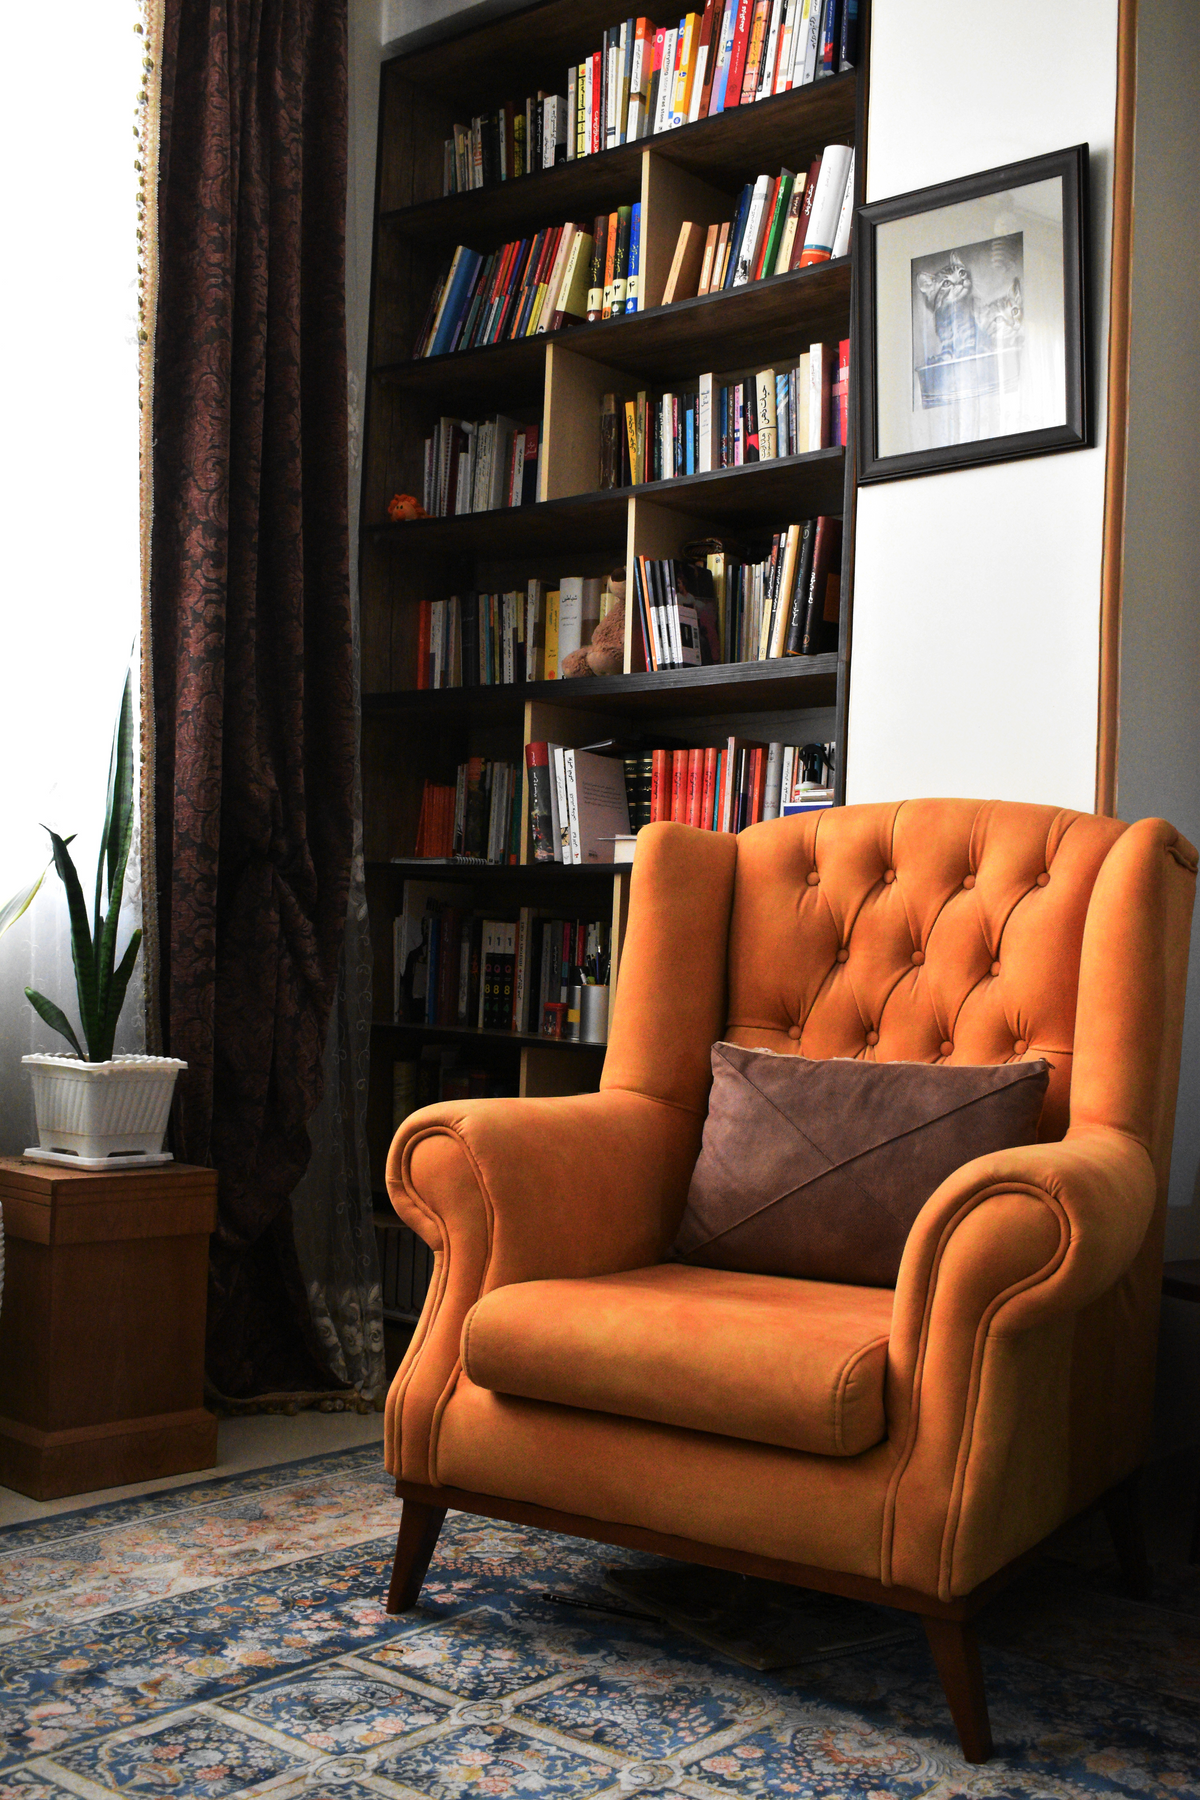 Sofa Chair Near Bookshelves